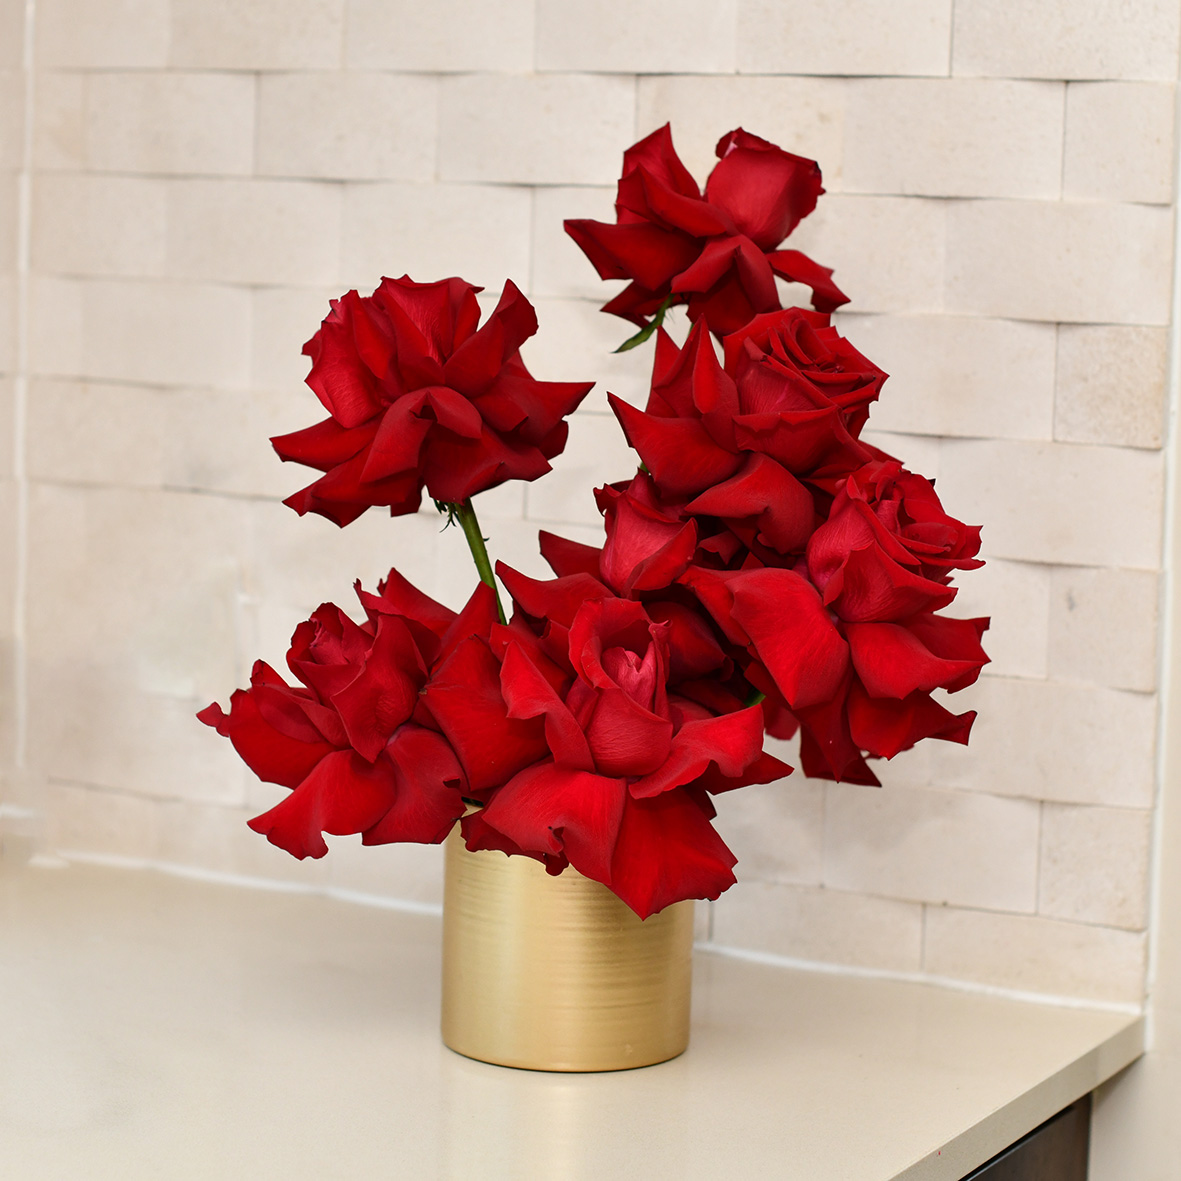 Roses in a Vase Sydney Delivery - Celebrations Florals